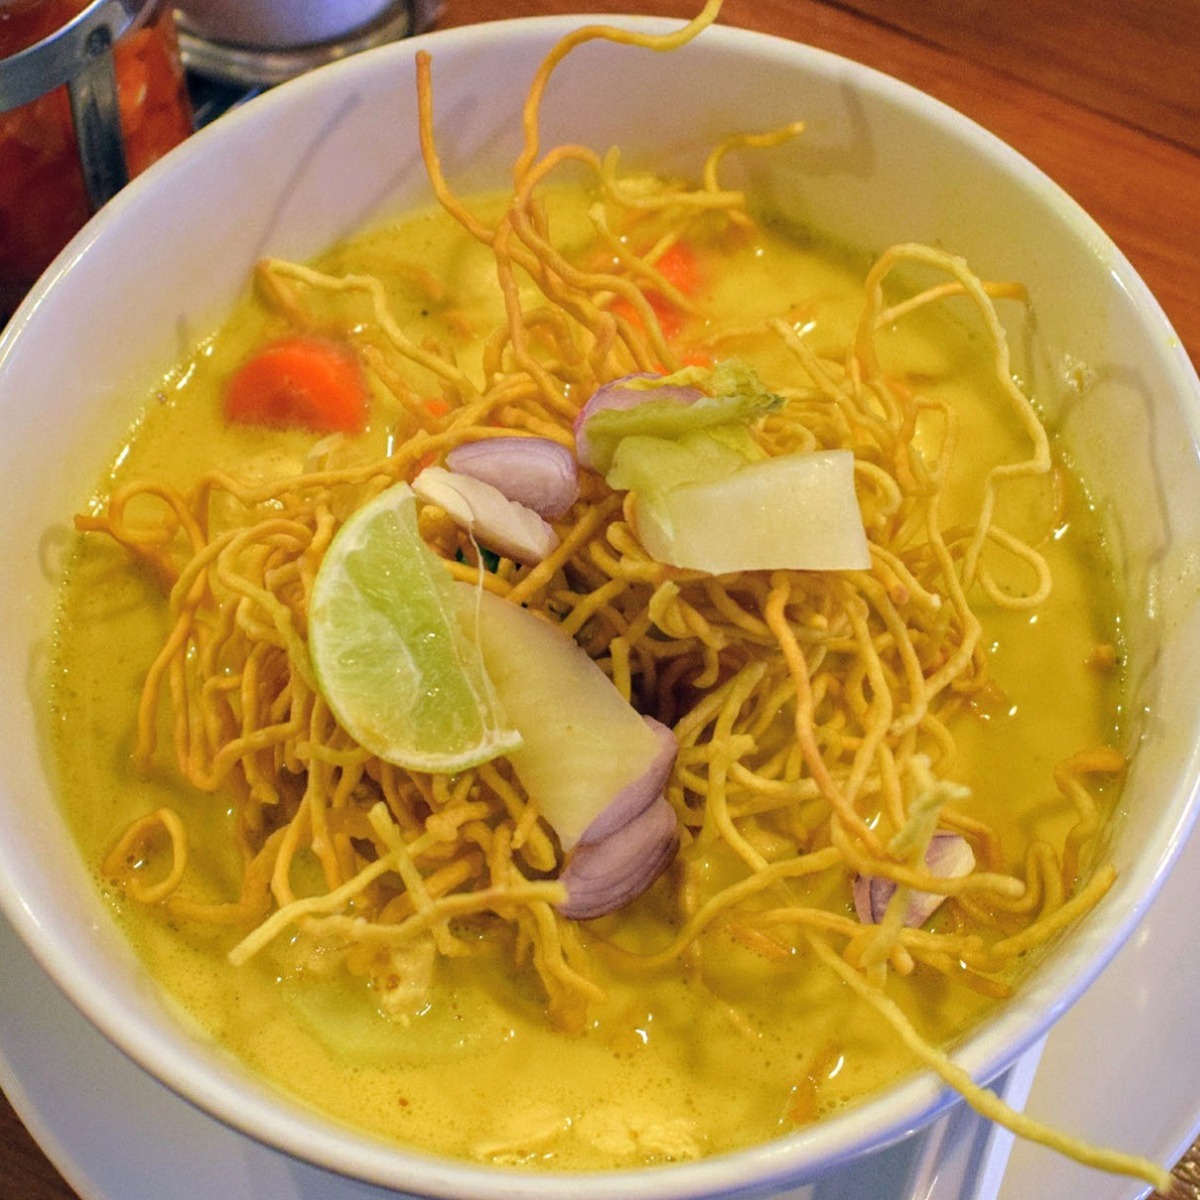 khao soi southeast asian curry noodle soup north thailand and laos